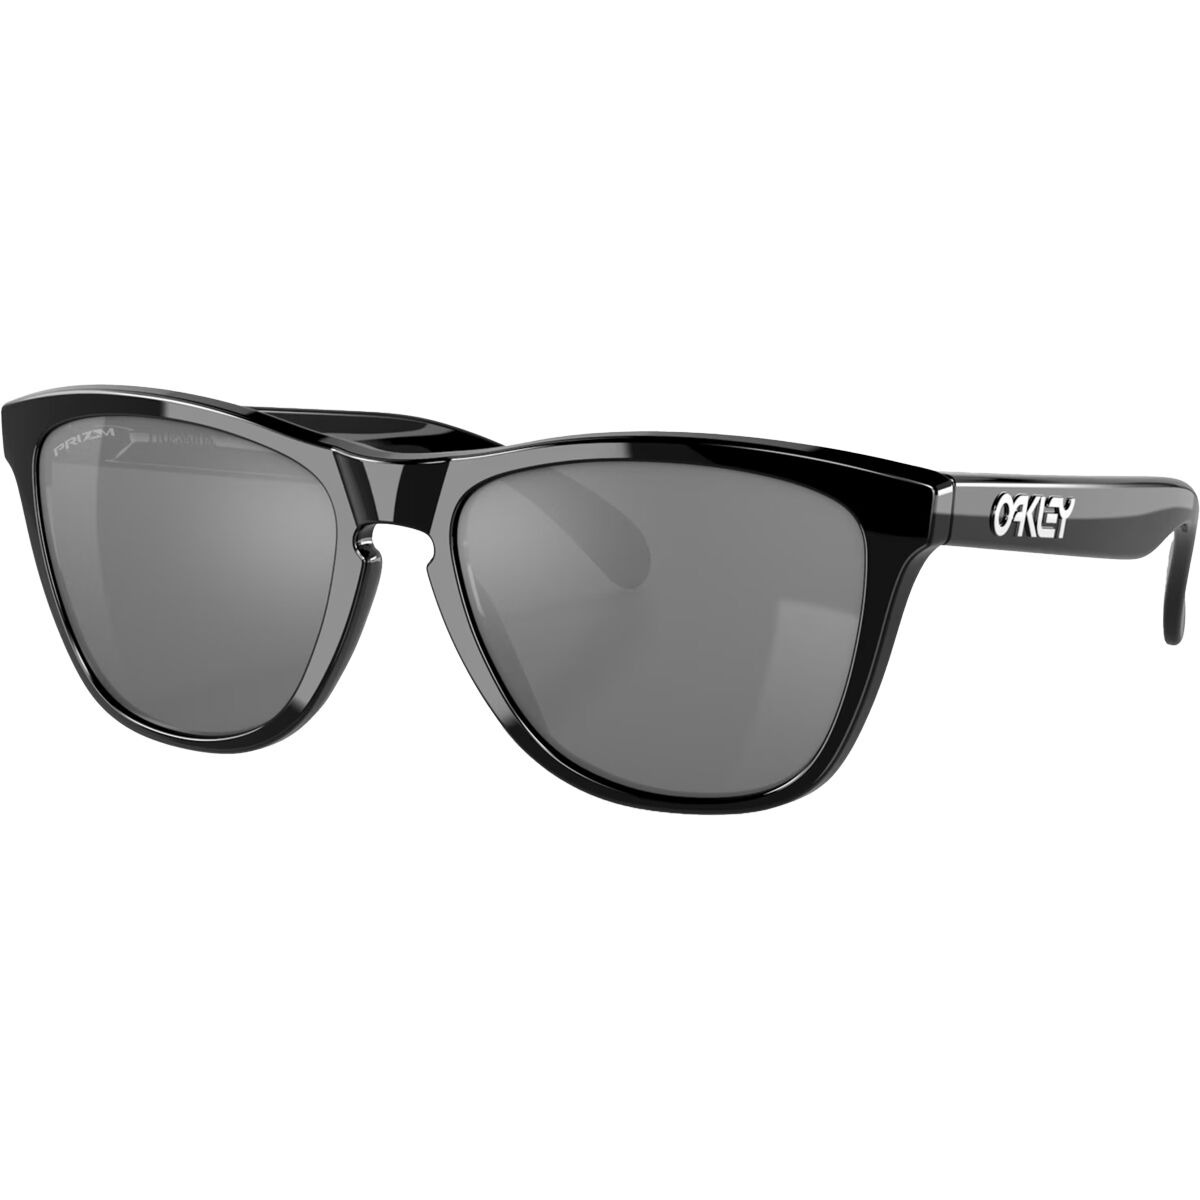 Oakley Frogskins Prizm Sunglasses - Men's